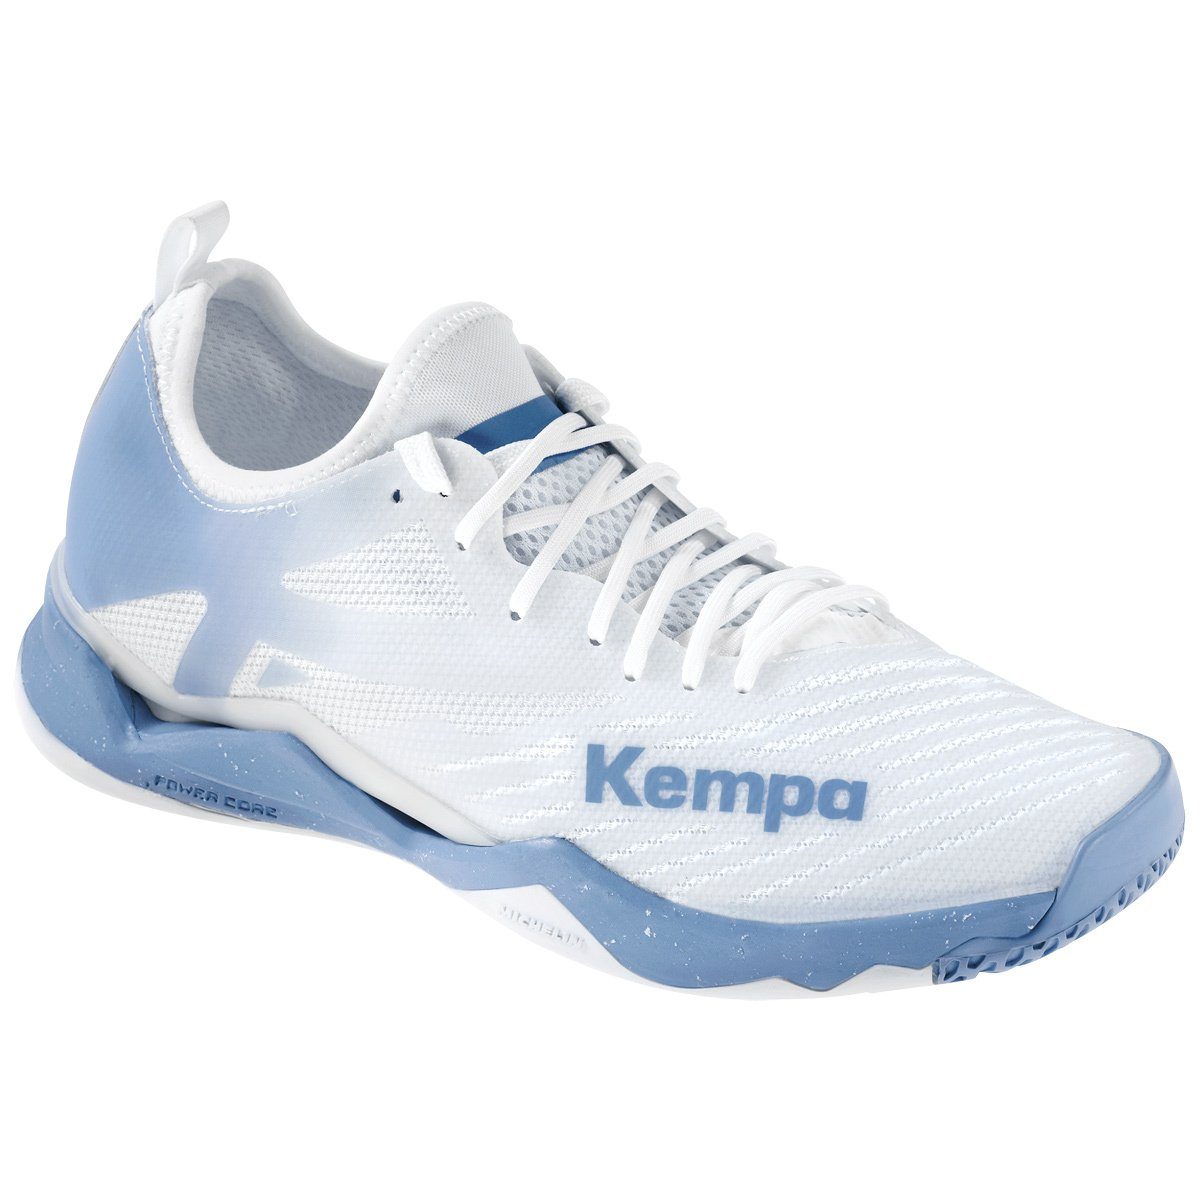 Kempa Kempa Hallen-Sport-Schuhe Hallenschuh weiß/lake blau